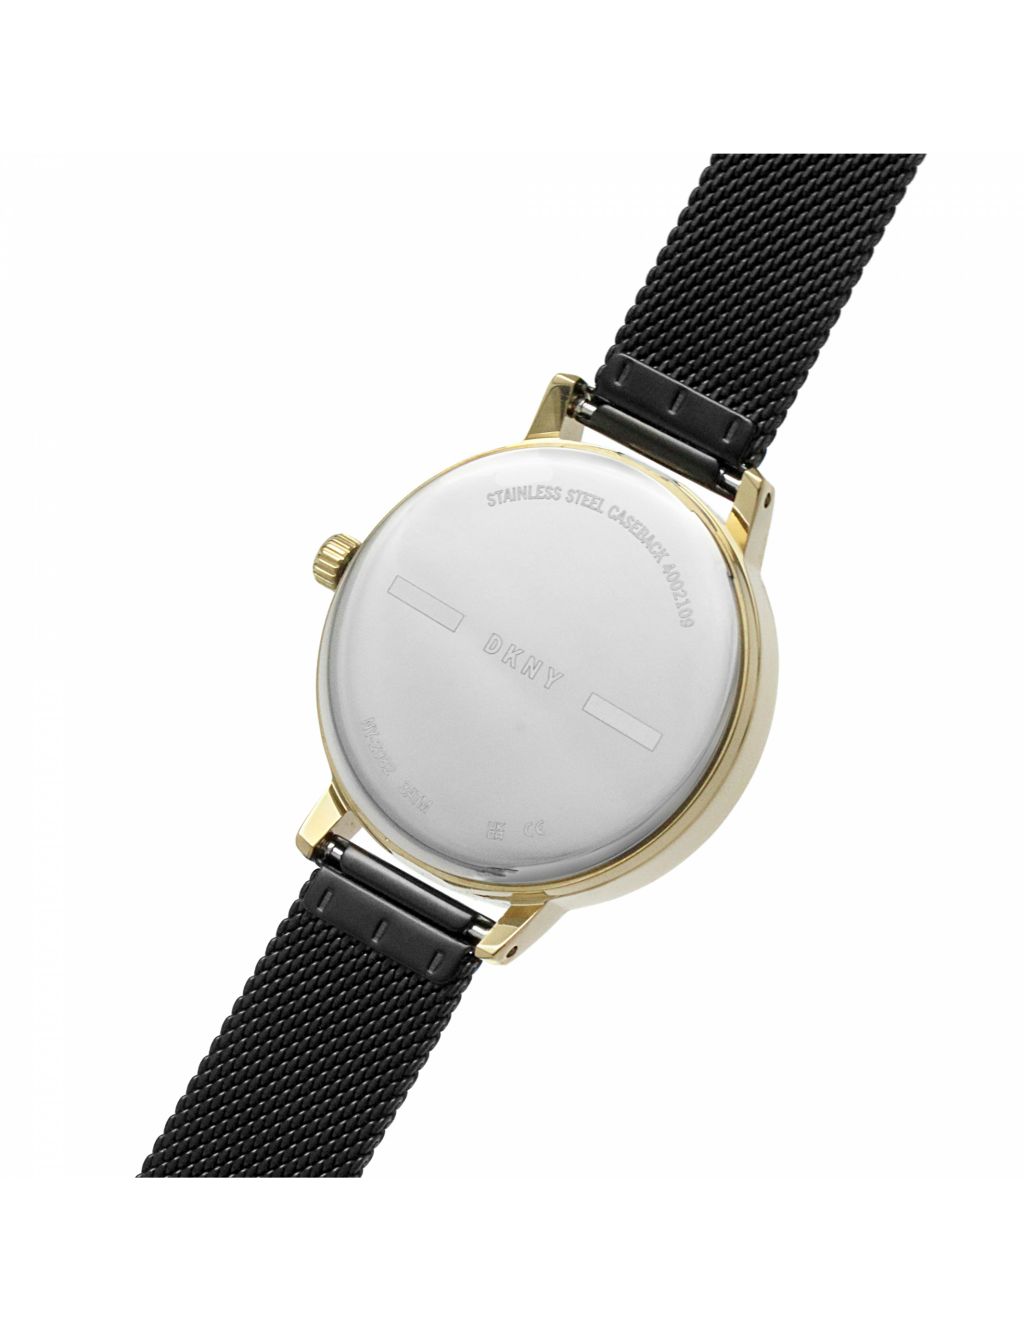 DKNY The Modernist Black Watch image 7